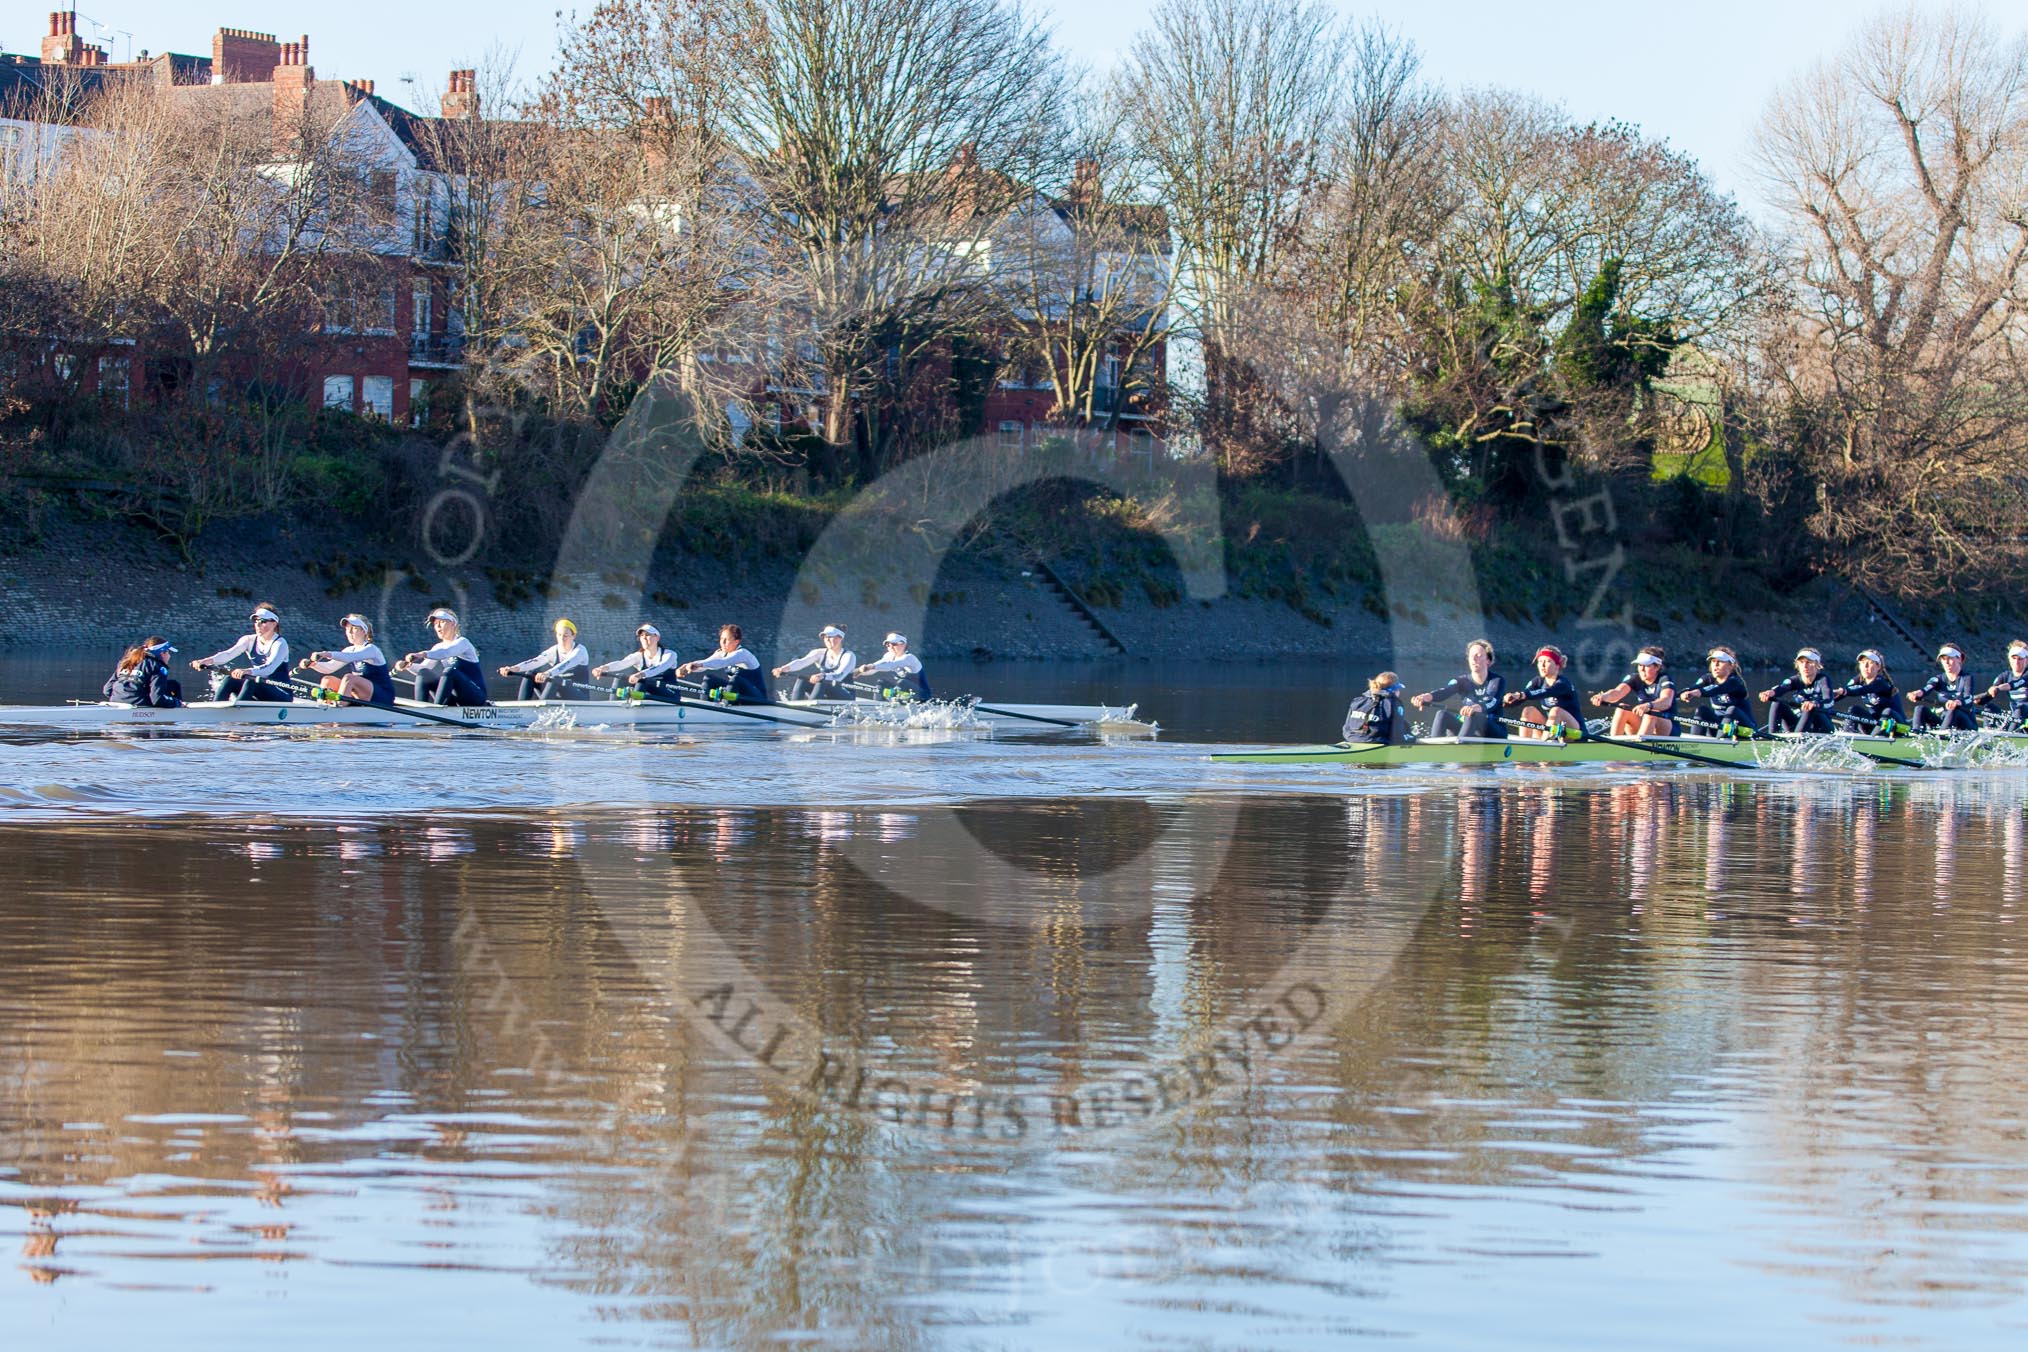 The Boat Race season 2014 - Women's Trial VIIIs (OUWBC, Oxford): Boudicca vs Cleopatra..
River Thames between Putney Bridge and Mortlake,
London SW15,

United Kingdom,
on 19 December 2013 at 12:49, image #121